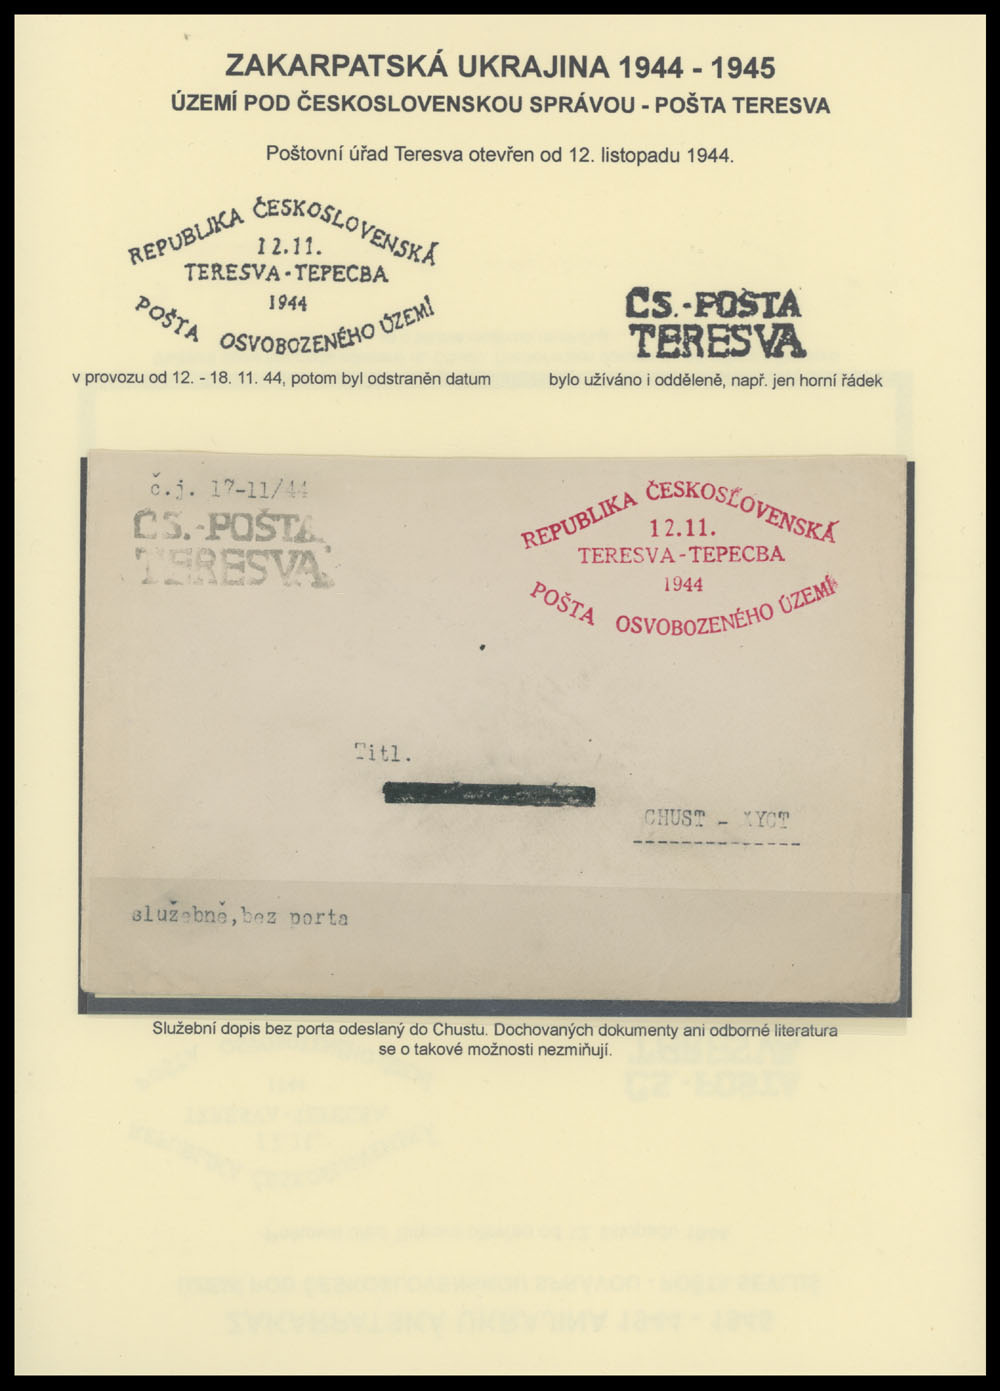 Lot 25 - 3. Chust Postal History items Teresva Postal History Items -  Raritan Stamps Inc. The Jiří Majer Collection of Carpatho - Ukraine 1944-1945, Live Bidding Auction #98